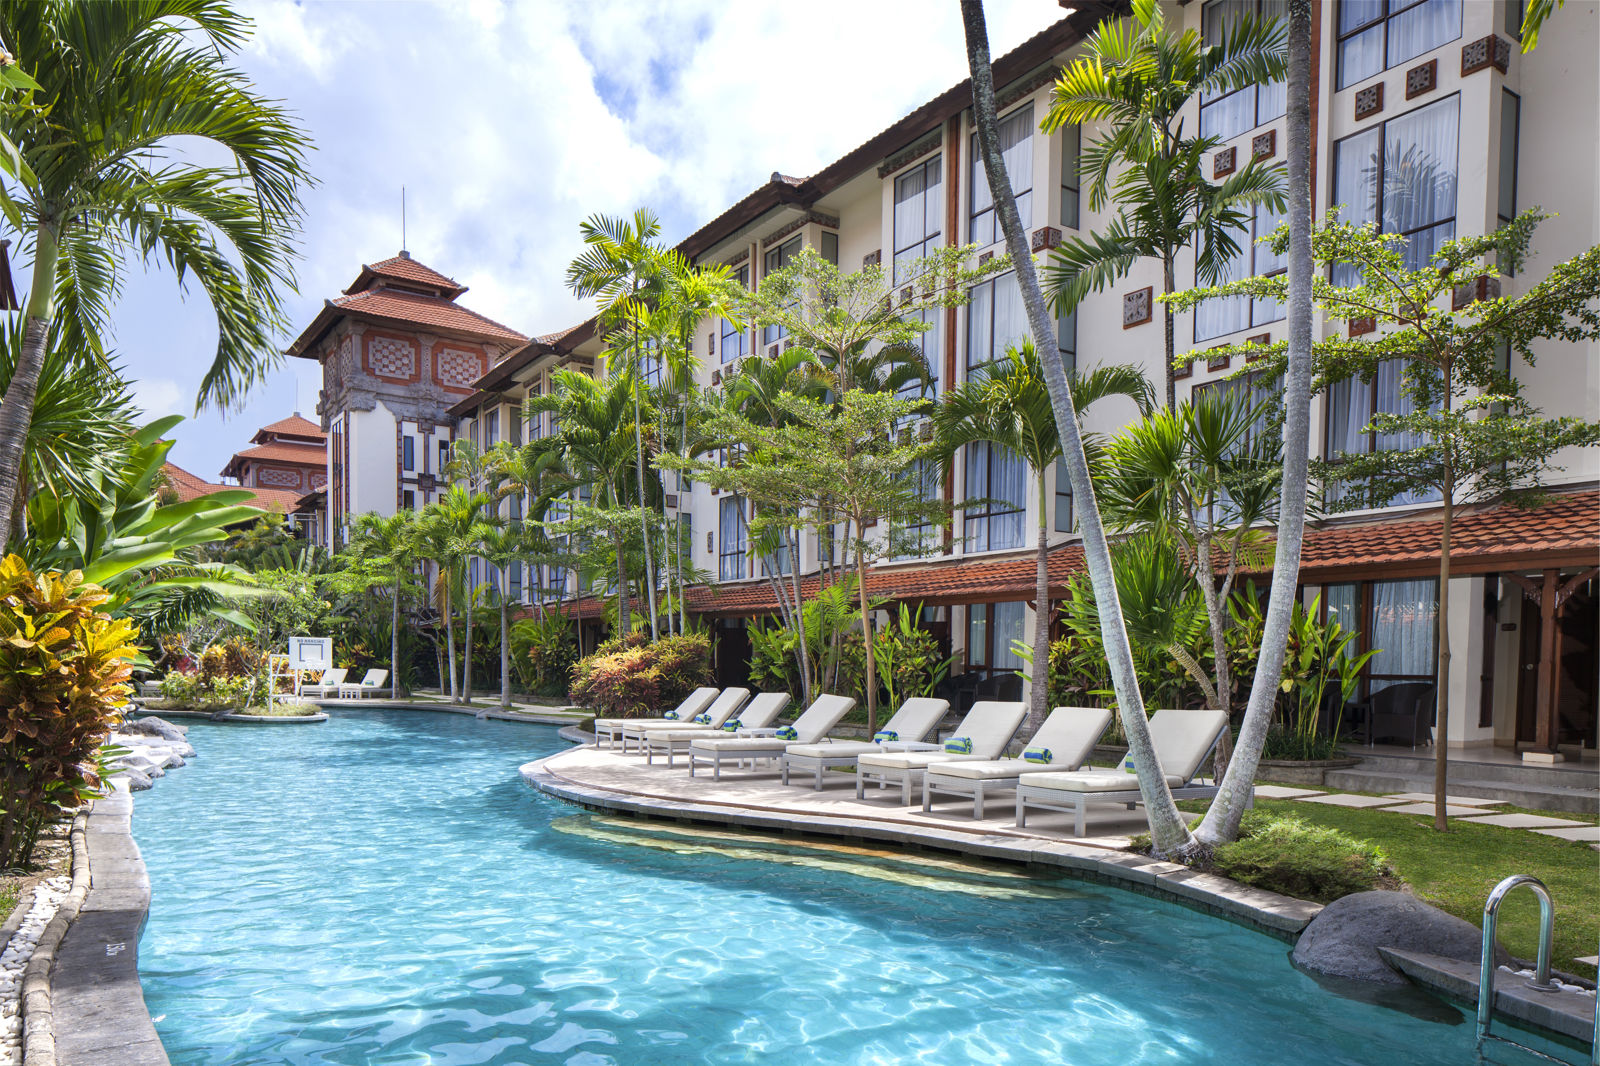 Prime Plaza Hotel Sanur - Indonesiè - Bali - Sanur